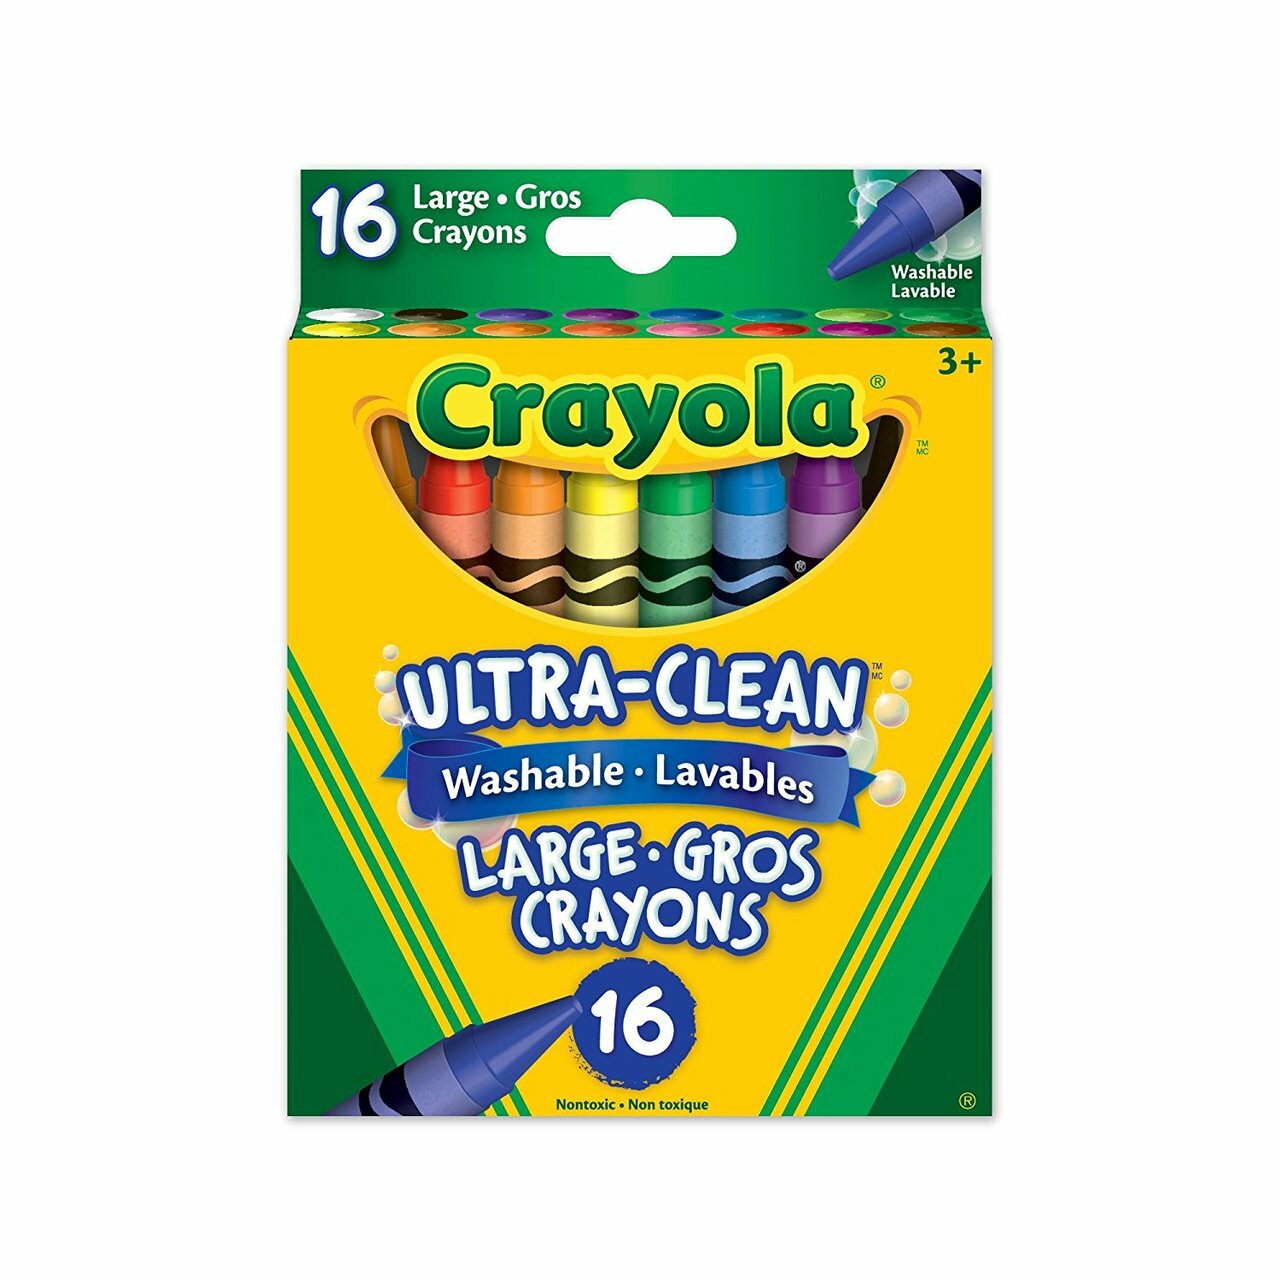 Dropship Crayola 64 Crayon Colors [Including Bluetiful] to Sell